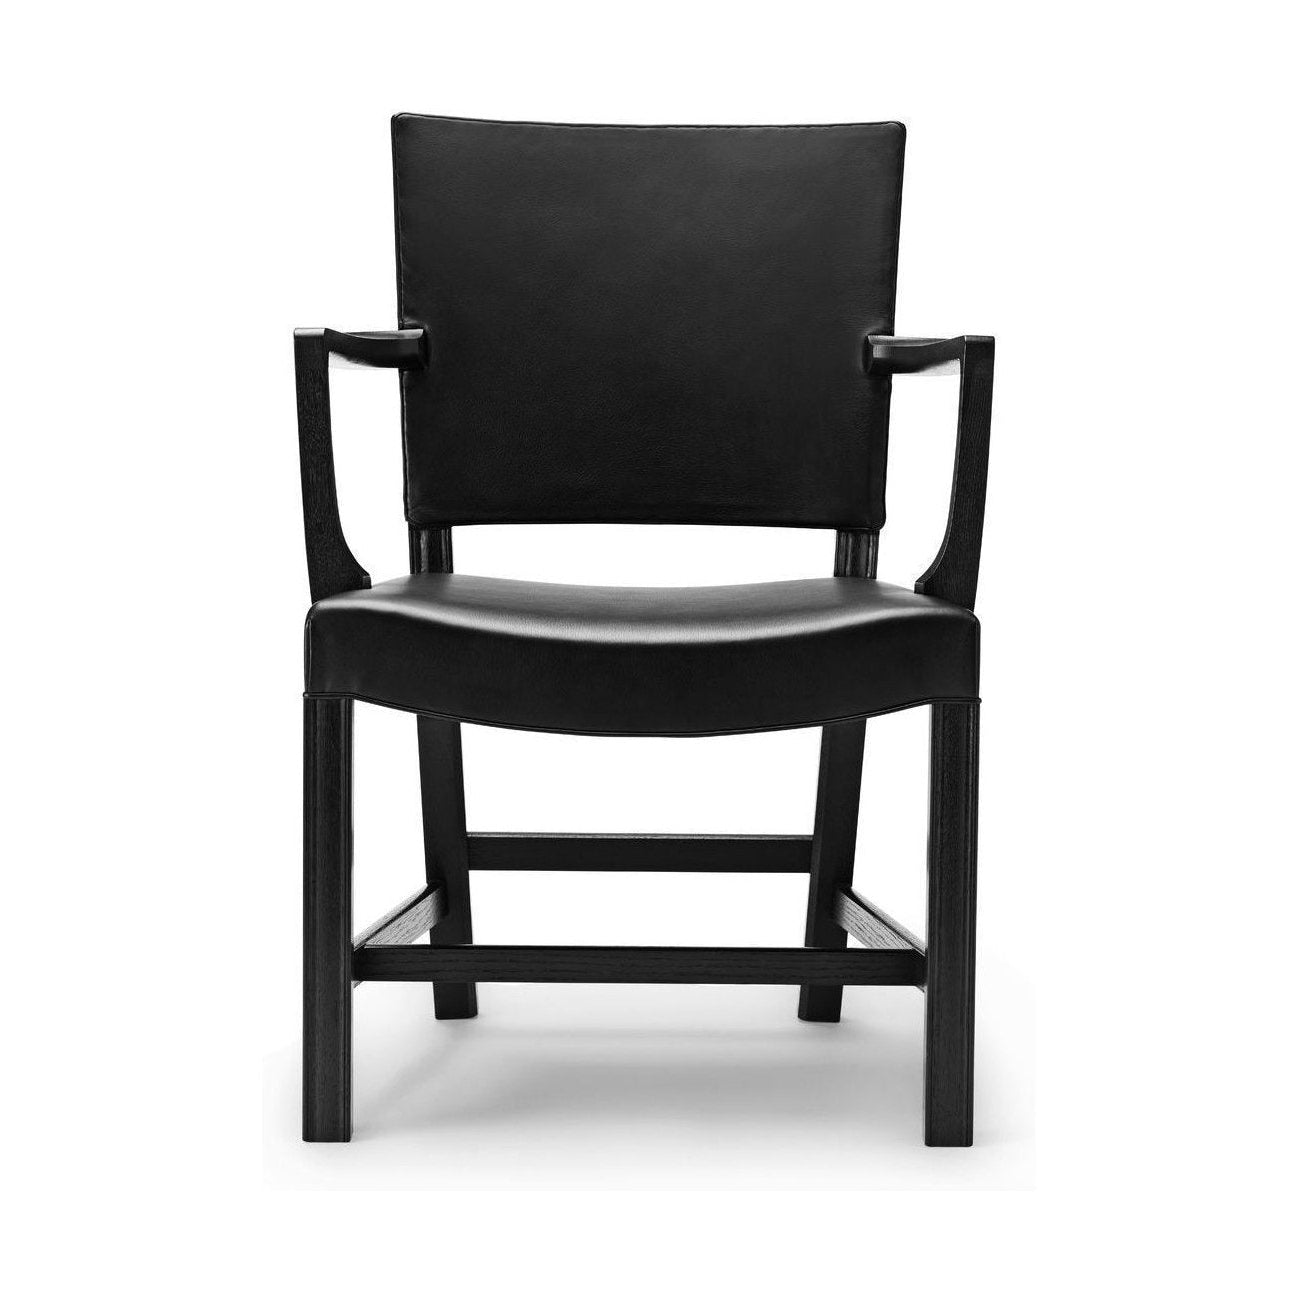 Carl Hansen KK37581 sillón rojo grande, roble negro/cuero negro